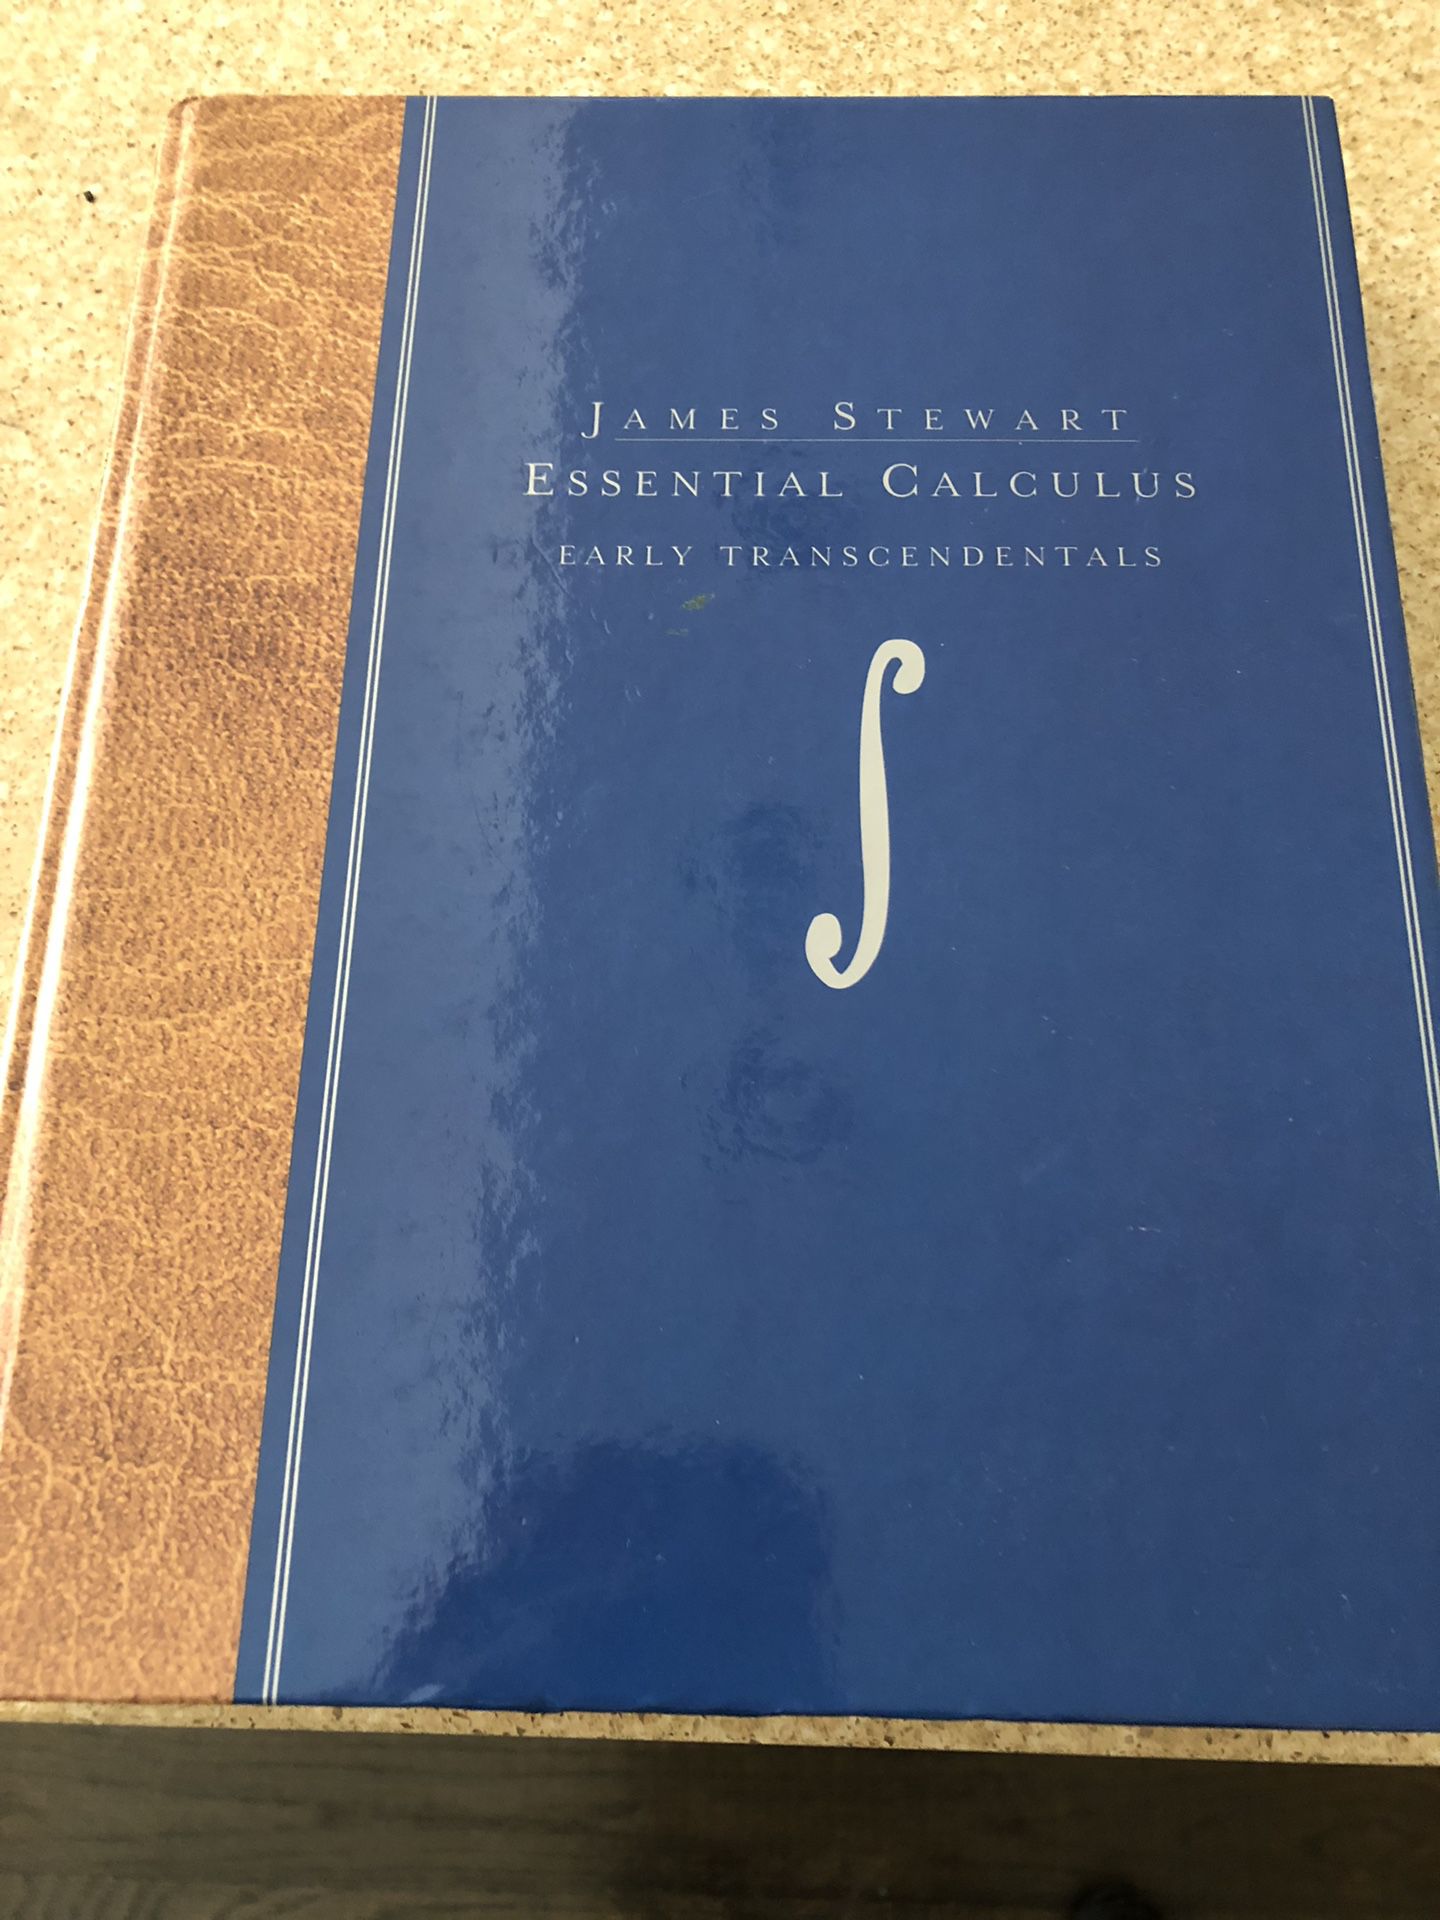 Free calculus book